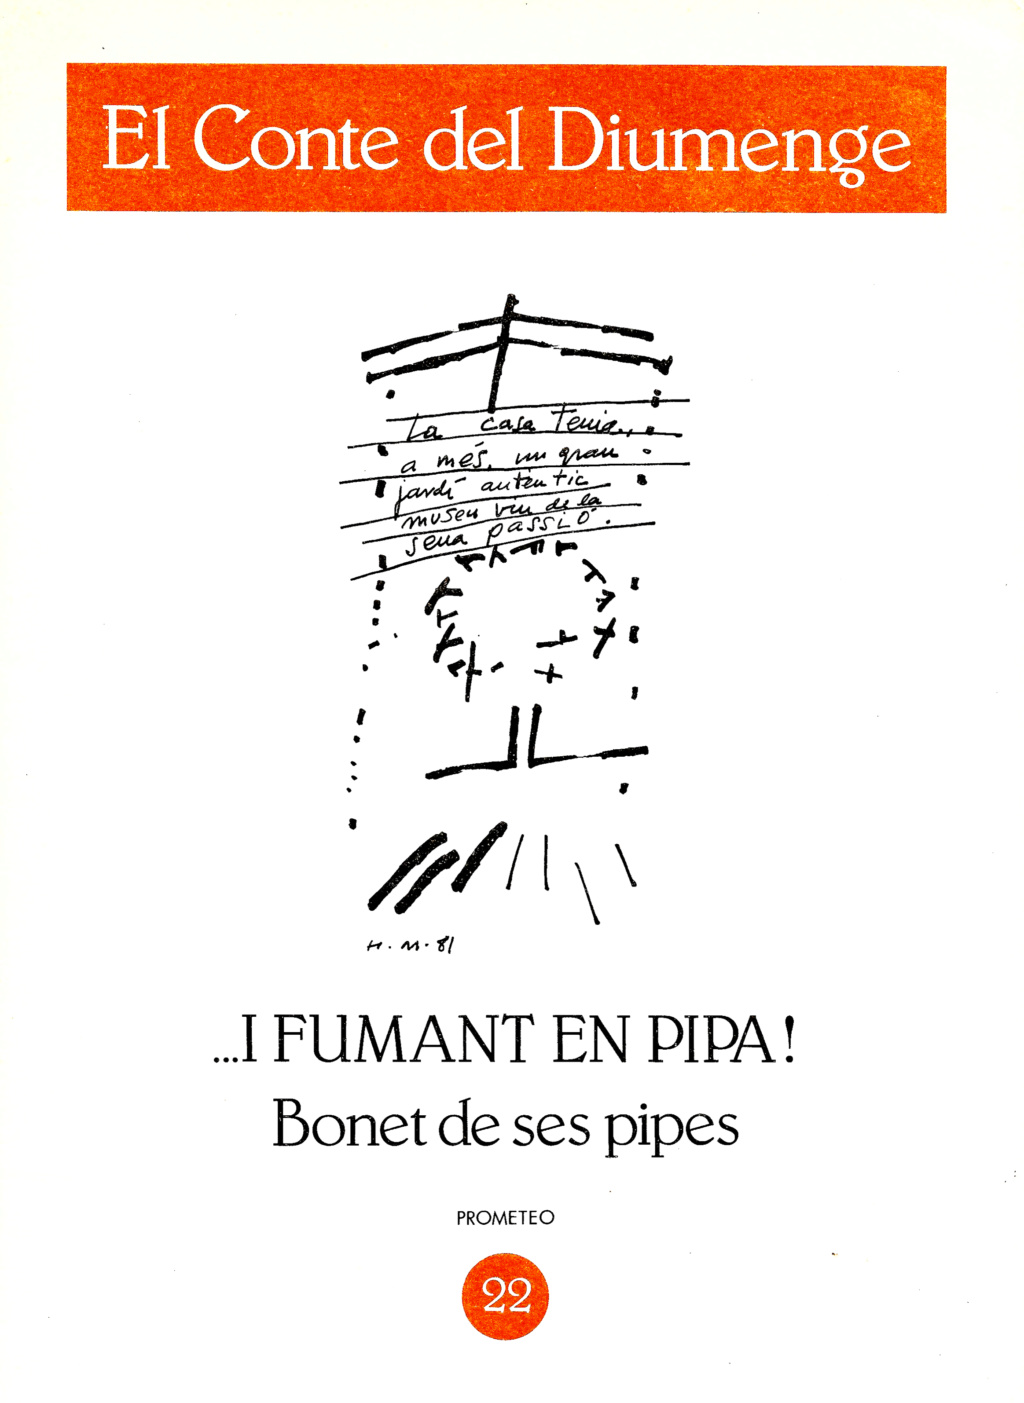 Torneo de Fumada Lenta "Bonet de ses Pipes" del Pipa Club de España - Monasterio de Lluc, Mallorca, 9nov2019 - Página 2 I_fuma23